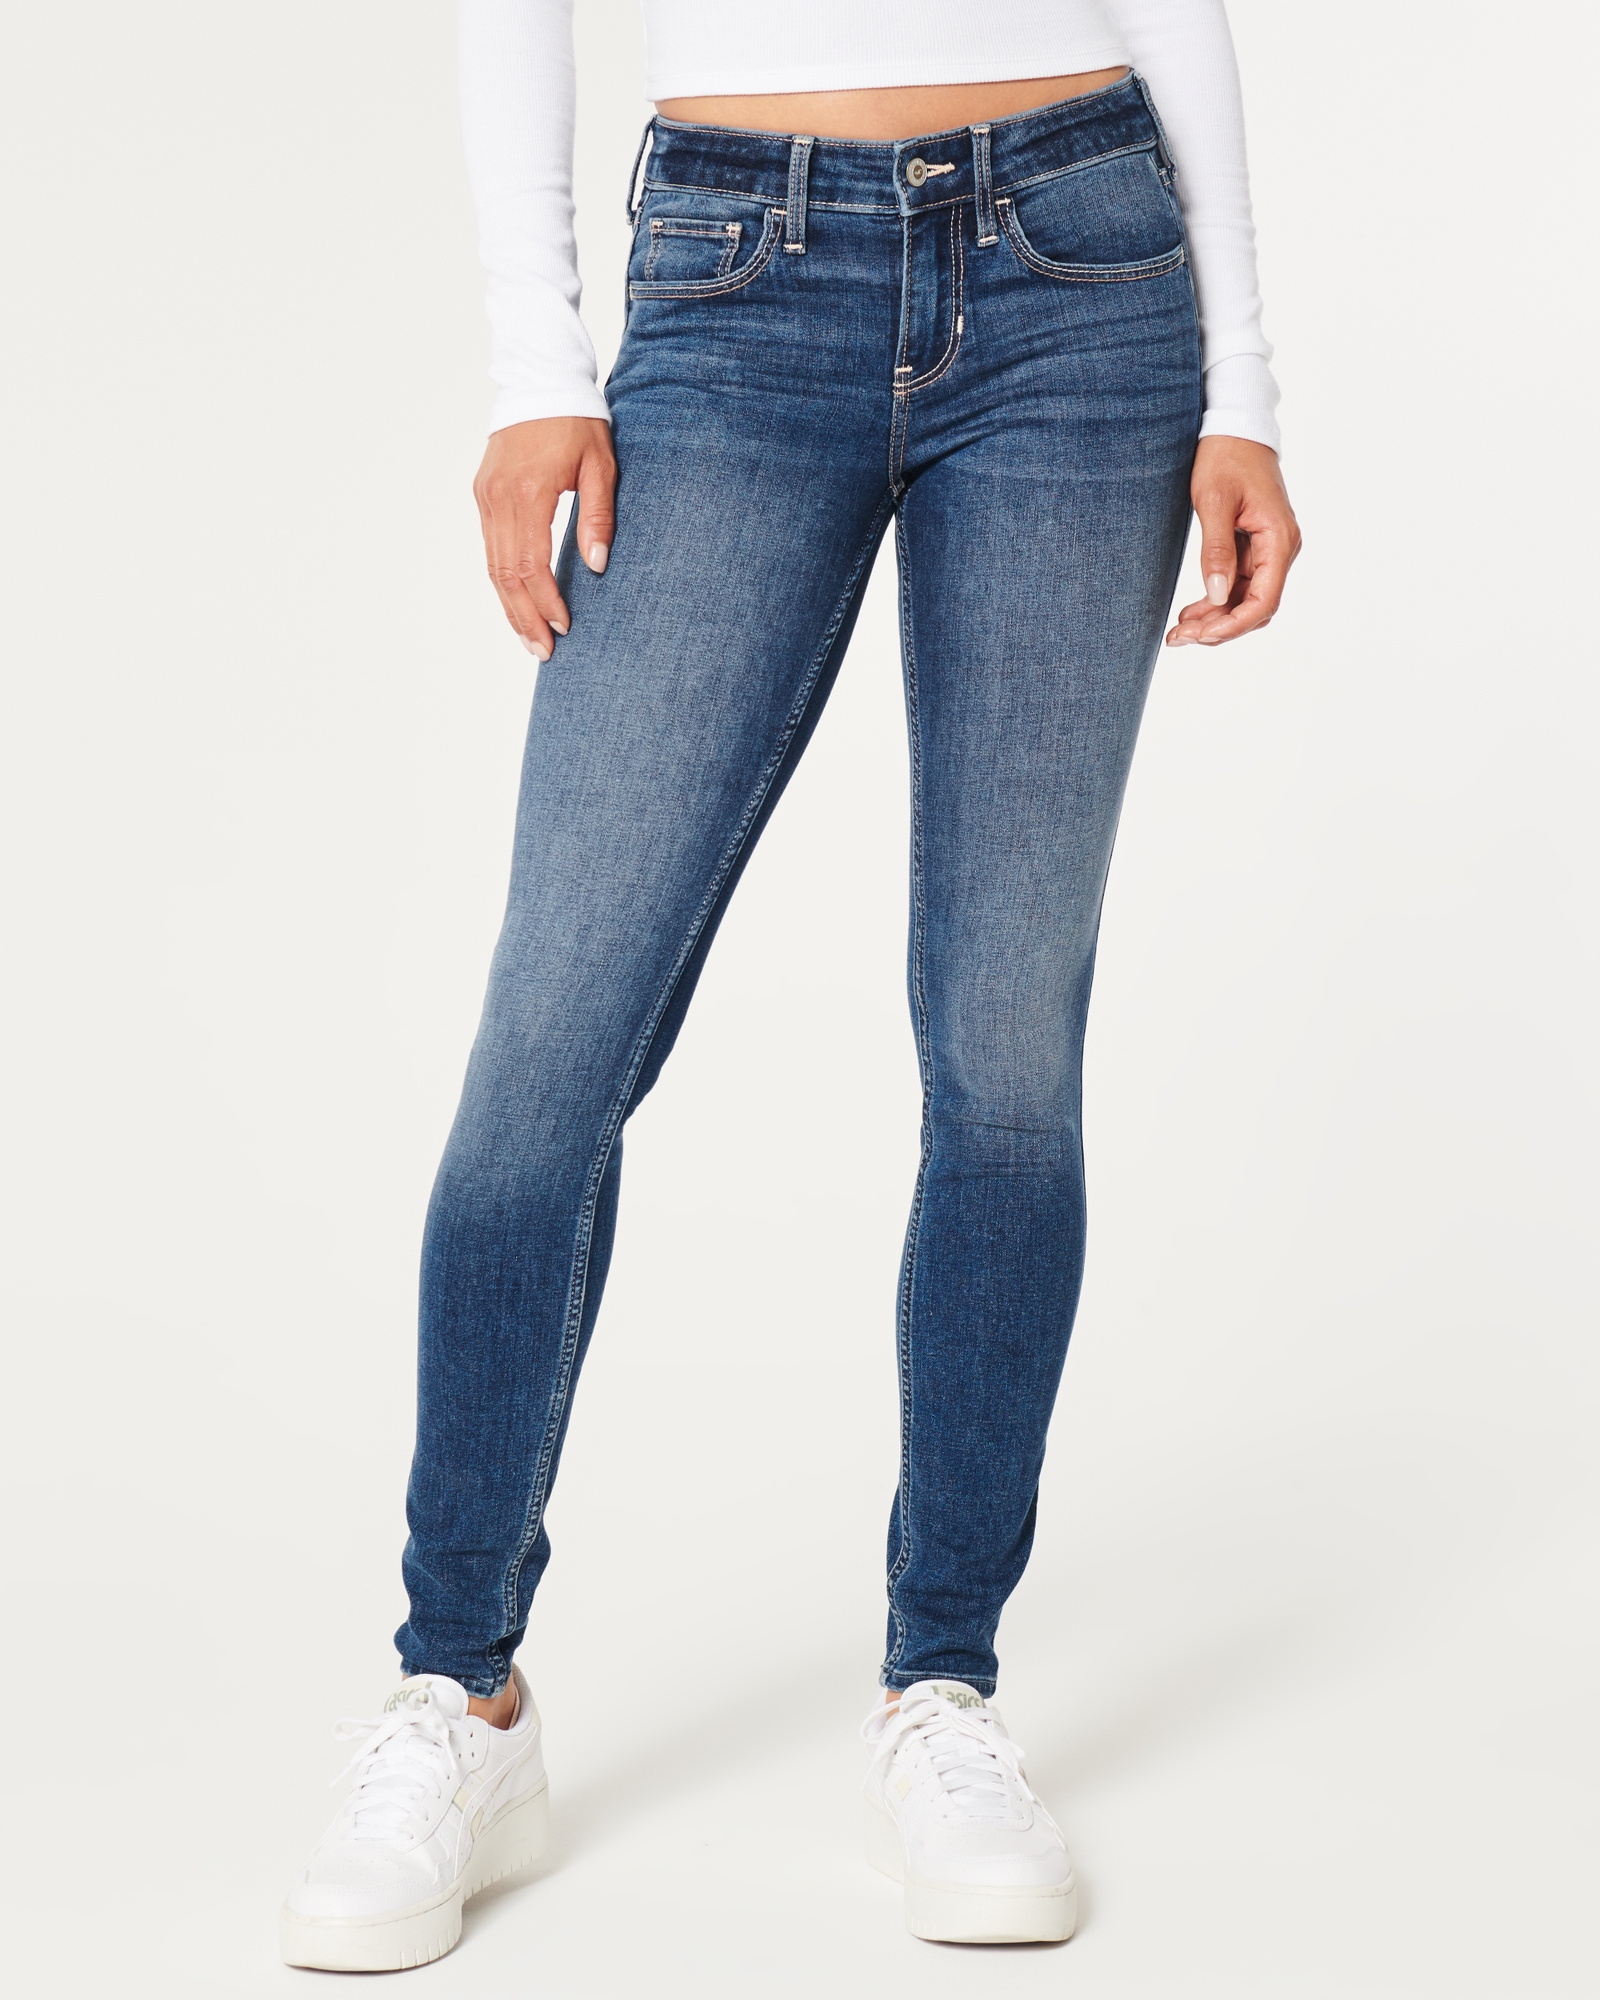 Women's Hollister Jeans Low Rose Super Skinny Distressed Sz 7R W28 L30  Great